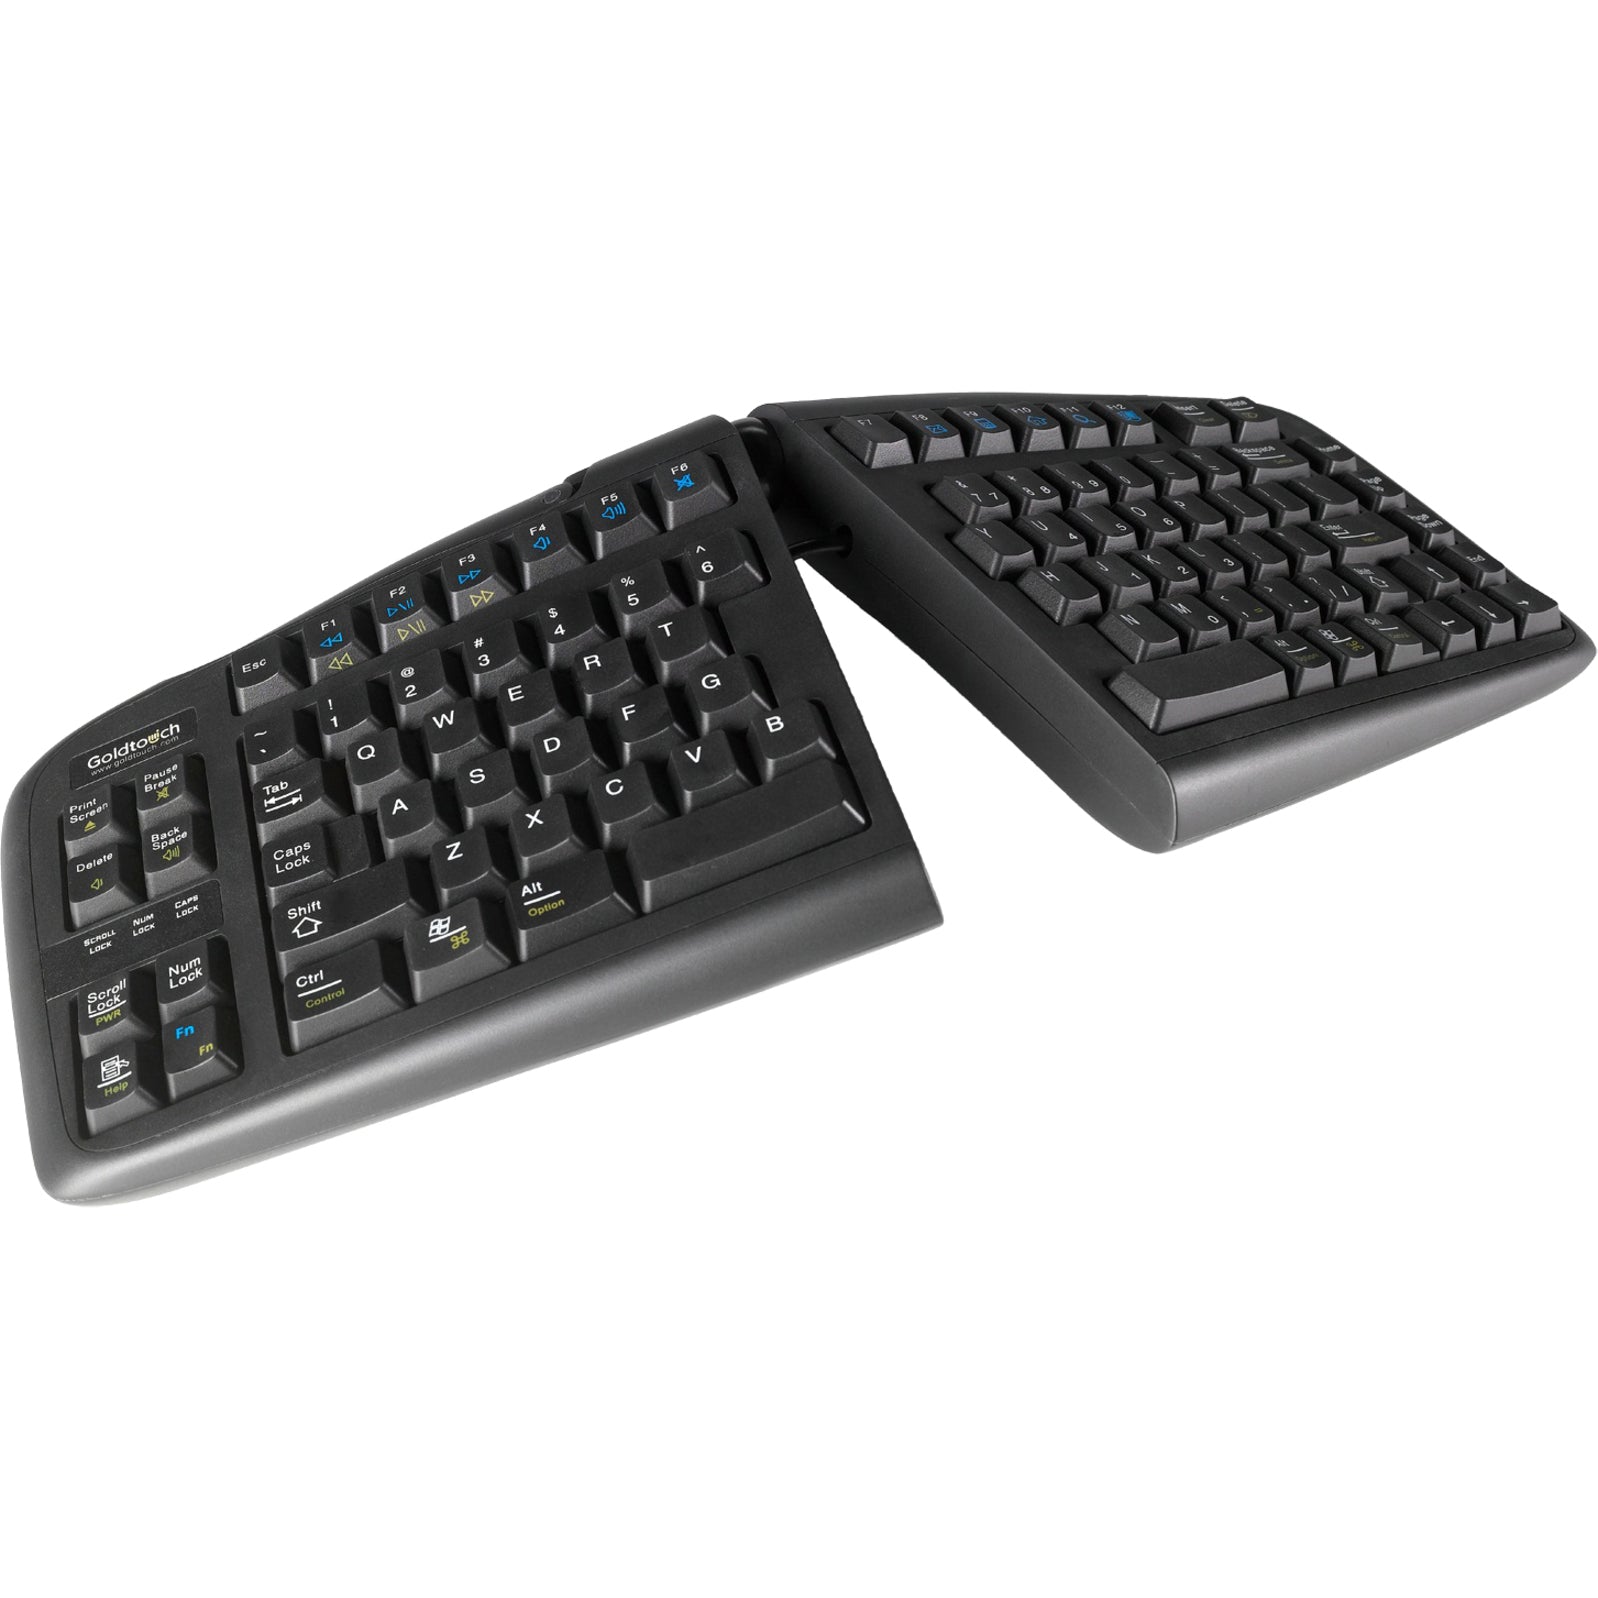 Goldtouch GTU-0088 Keyboard - Ergonomic Split Keyboard, USB Connectivity, English/French, PC/Mac Compatible, Black